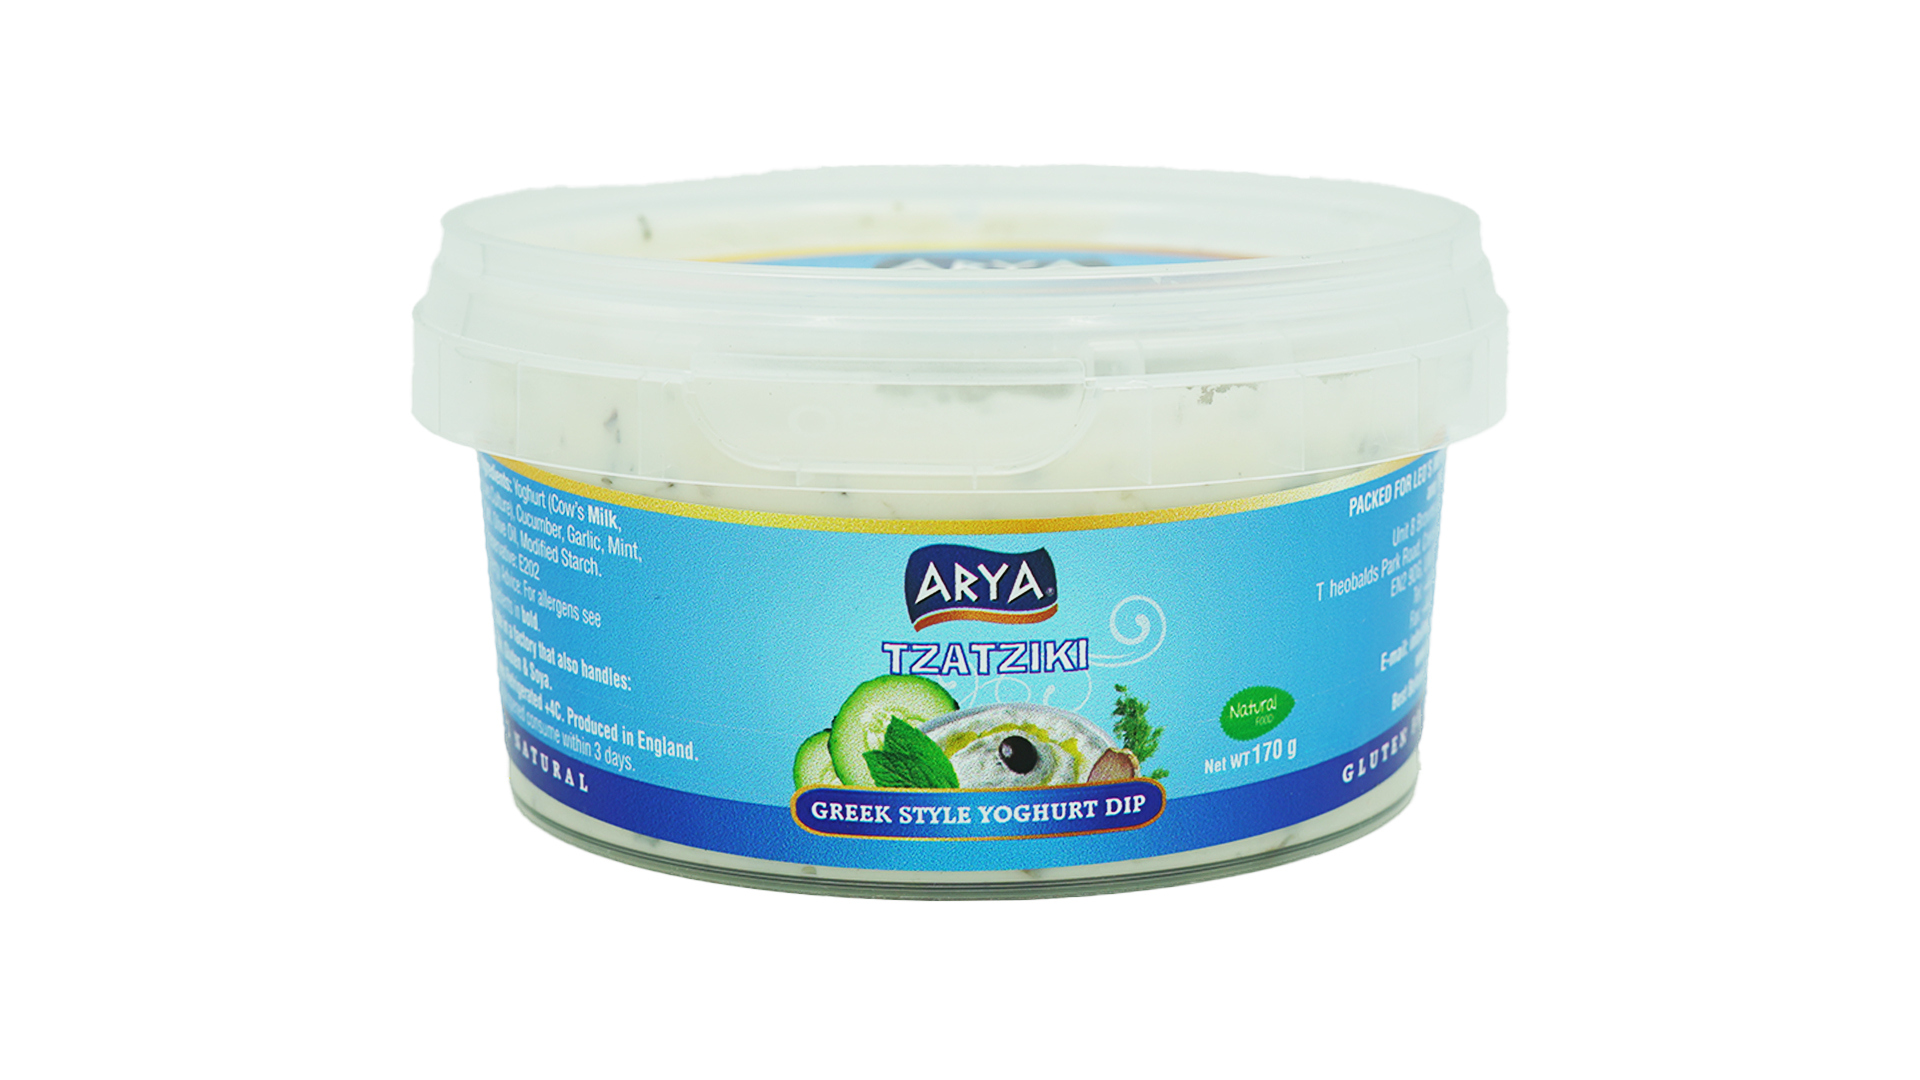 Arya tzatziki greek style yoghurt dip 170g 2